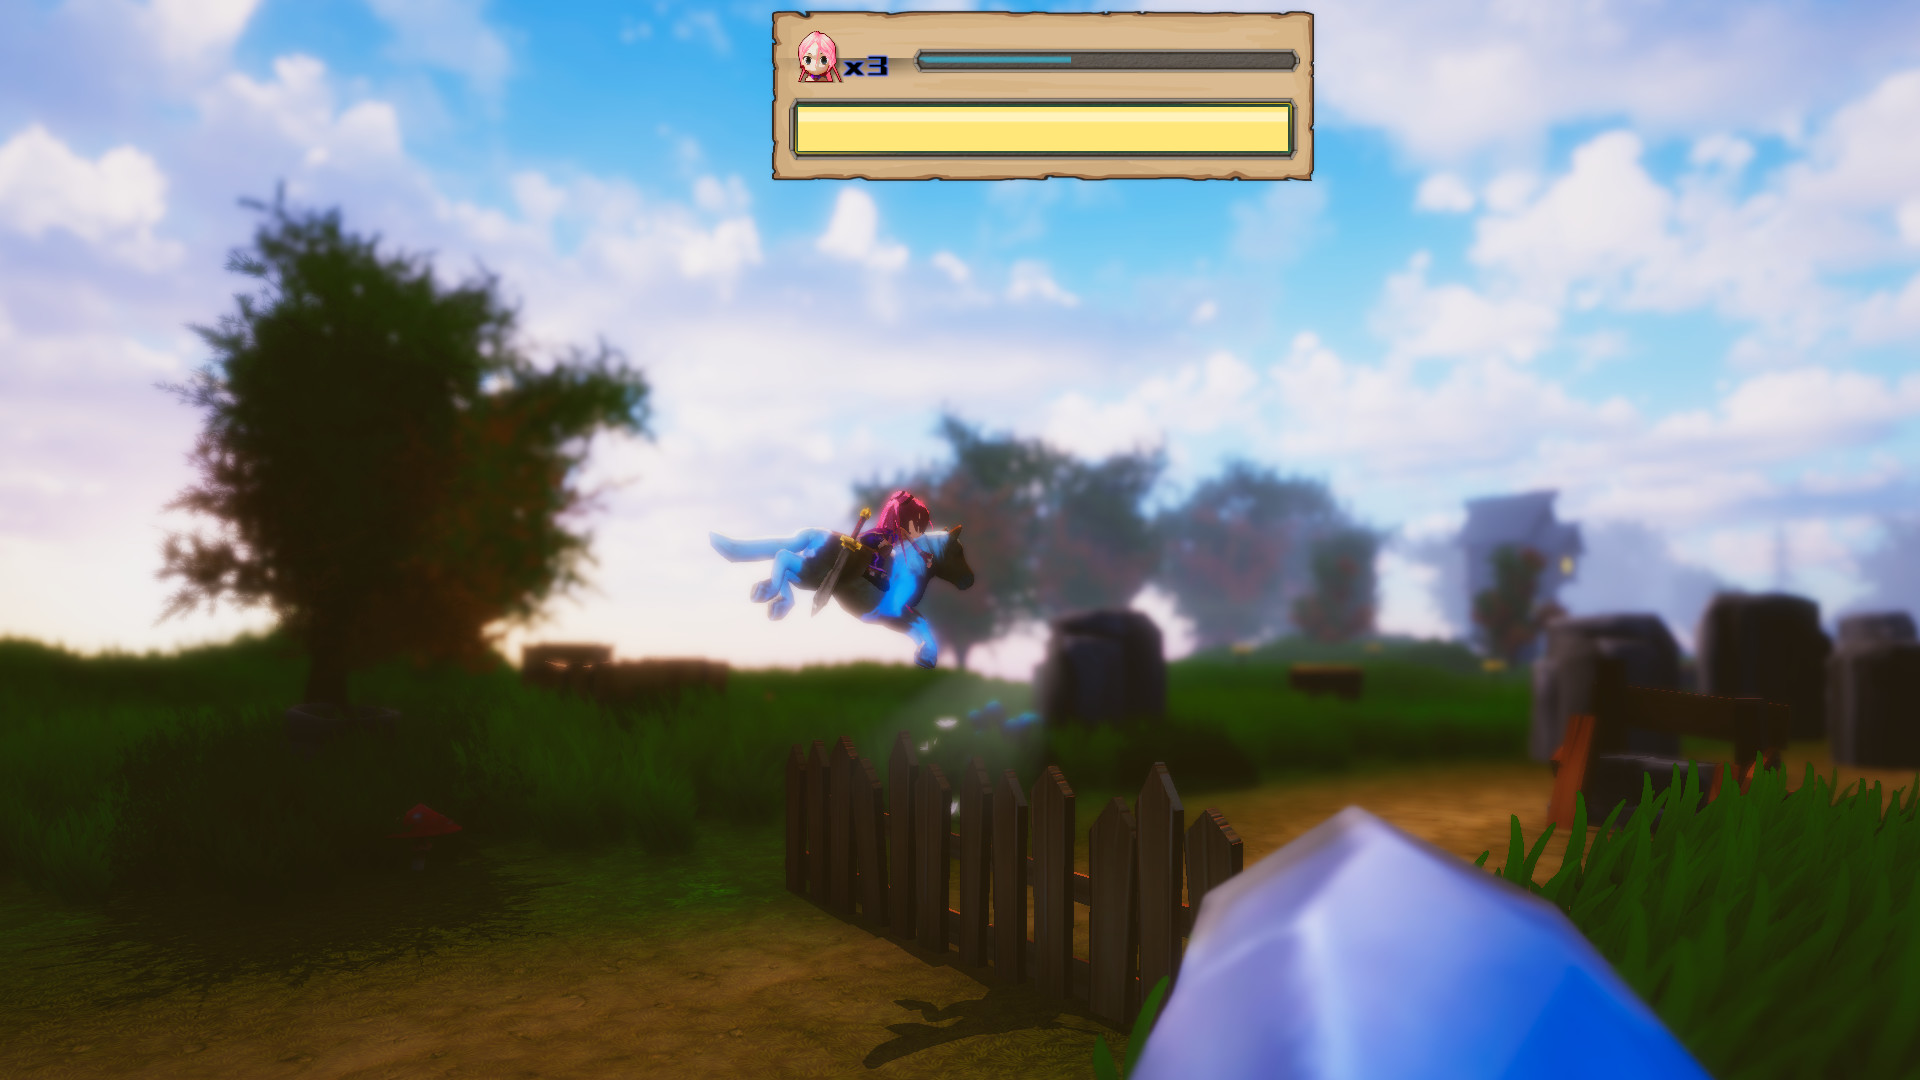 KiKi's adventure Demo Featured Screenshot #1